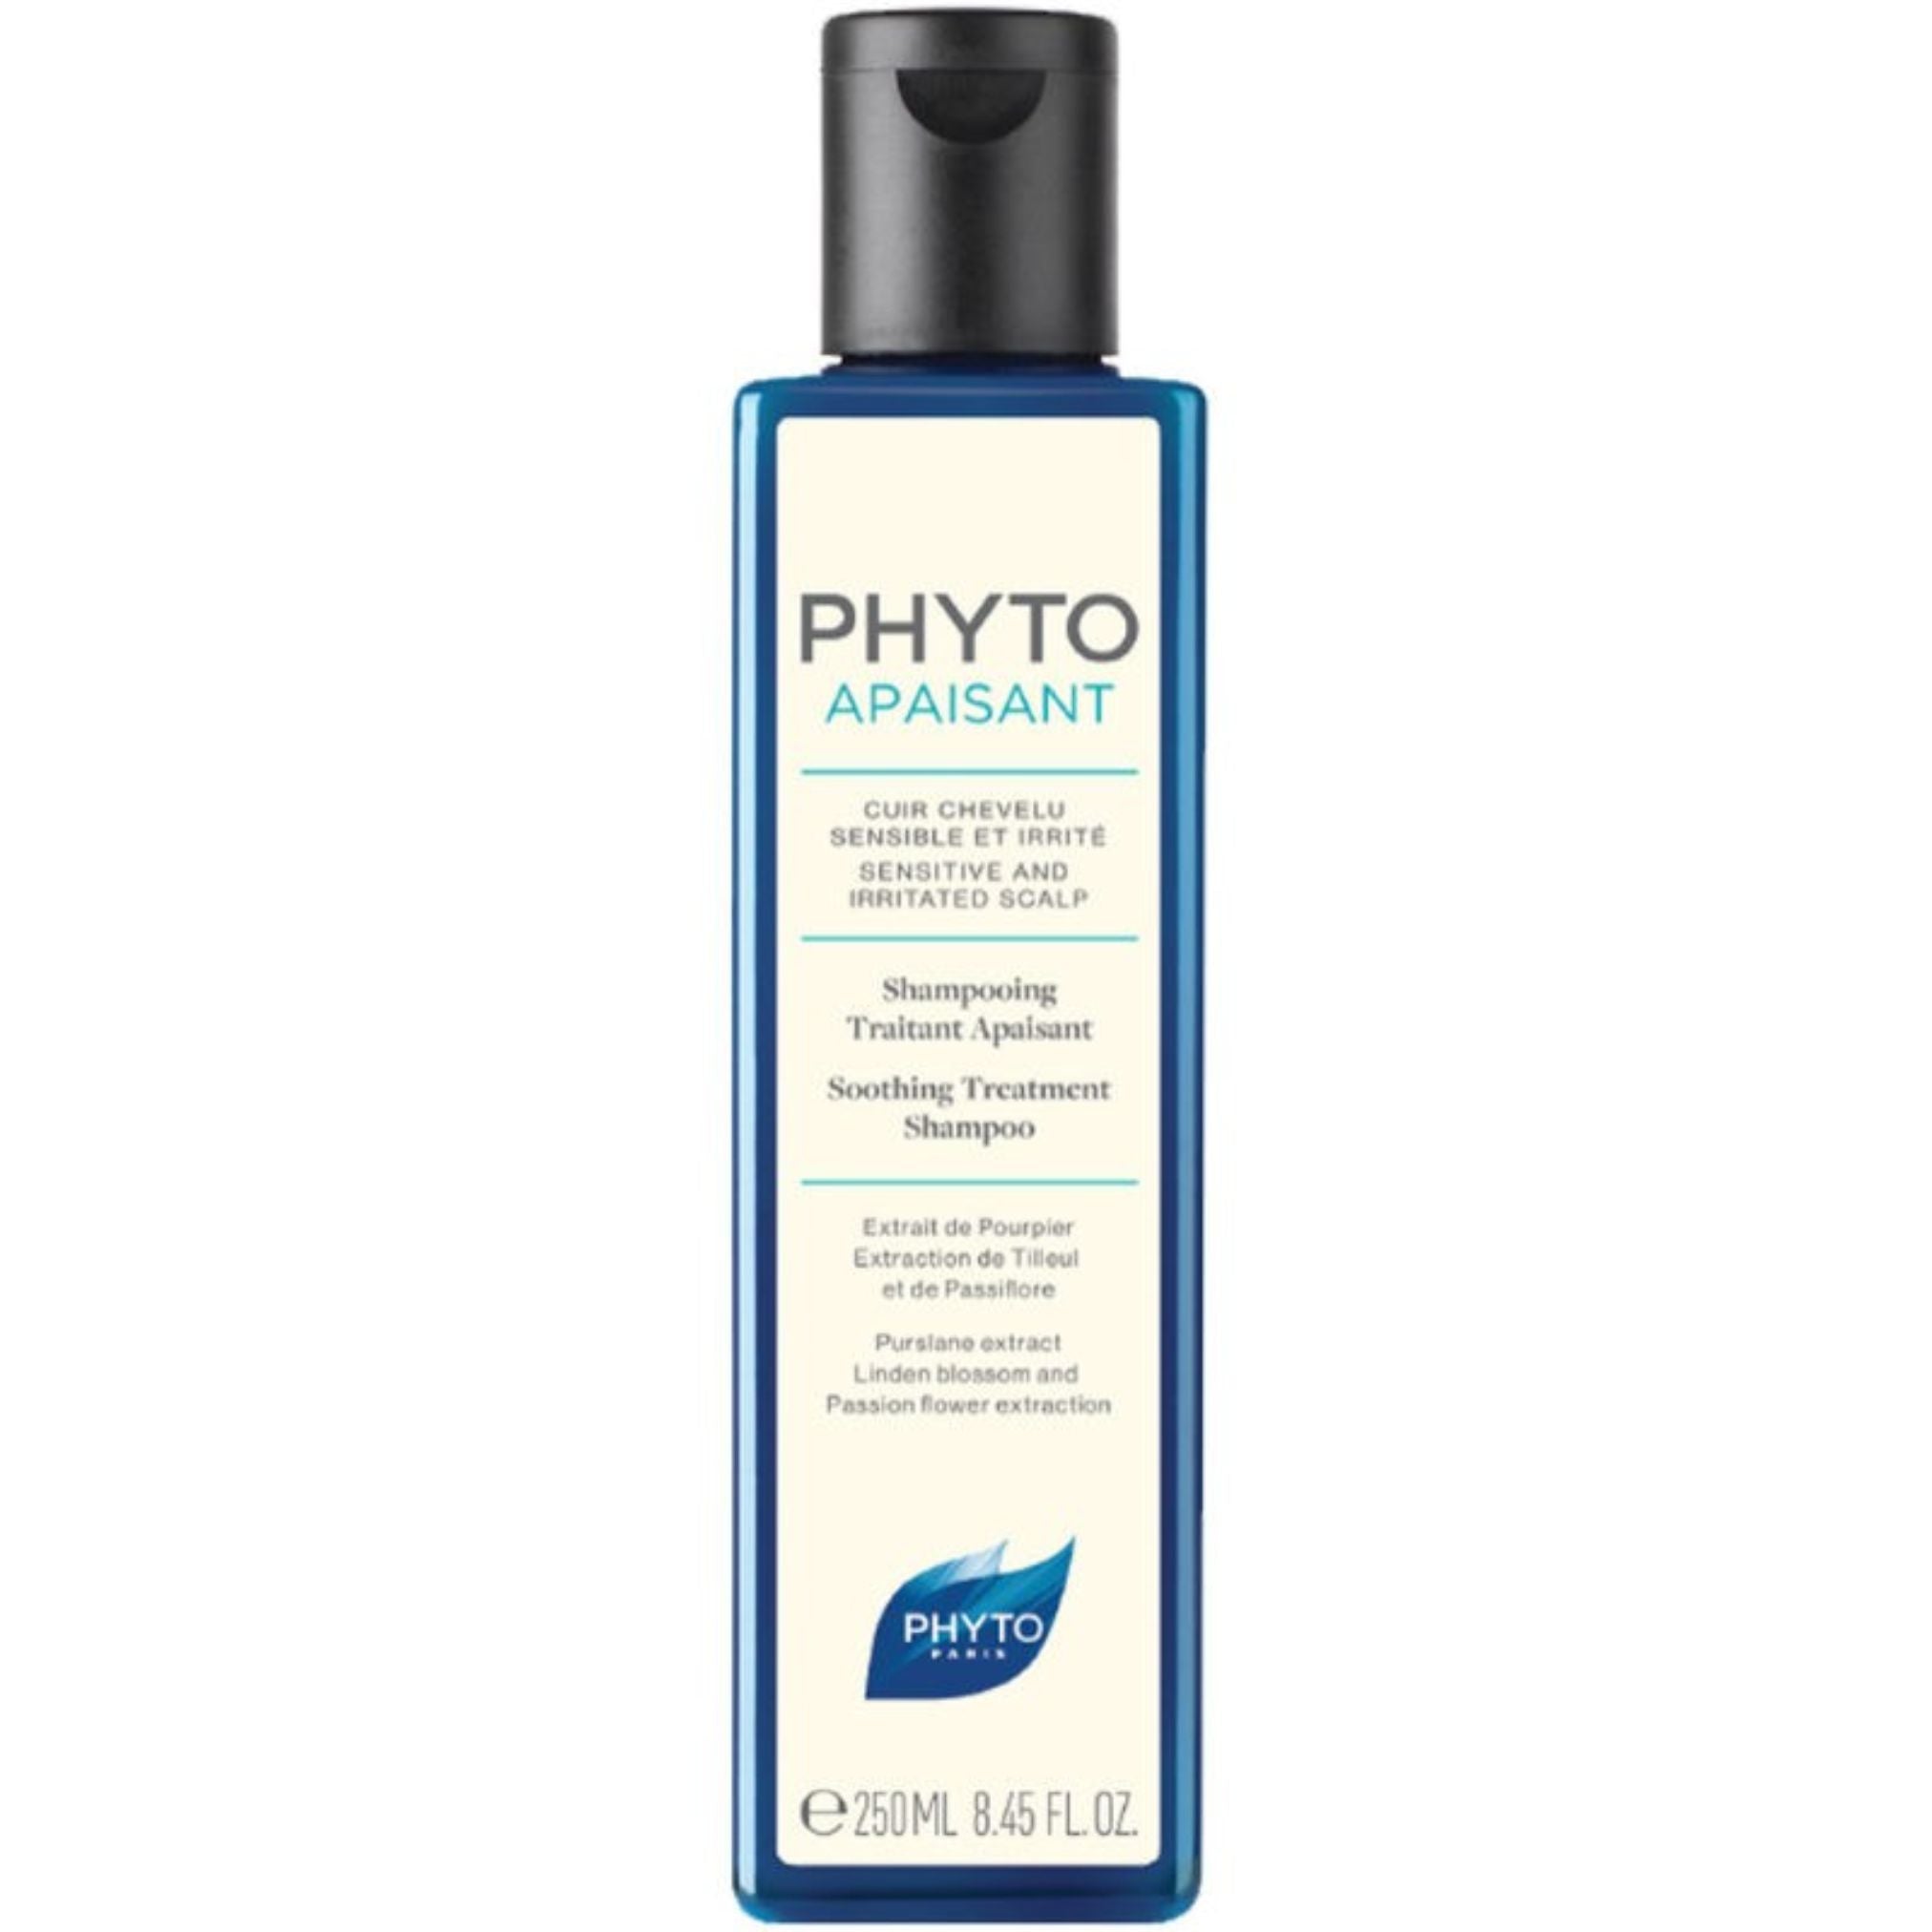 Phytoapaisant Soothing Treatment Shampoo Sensitive and Irritated Scalp 200ml